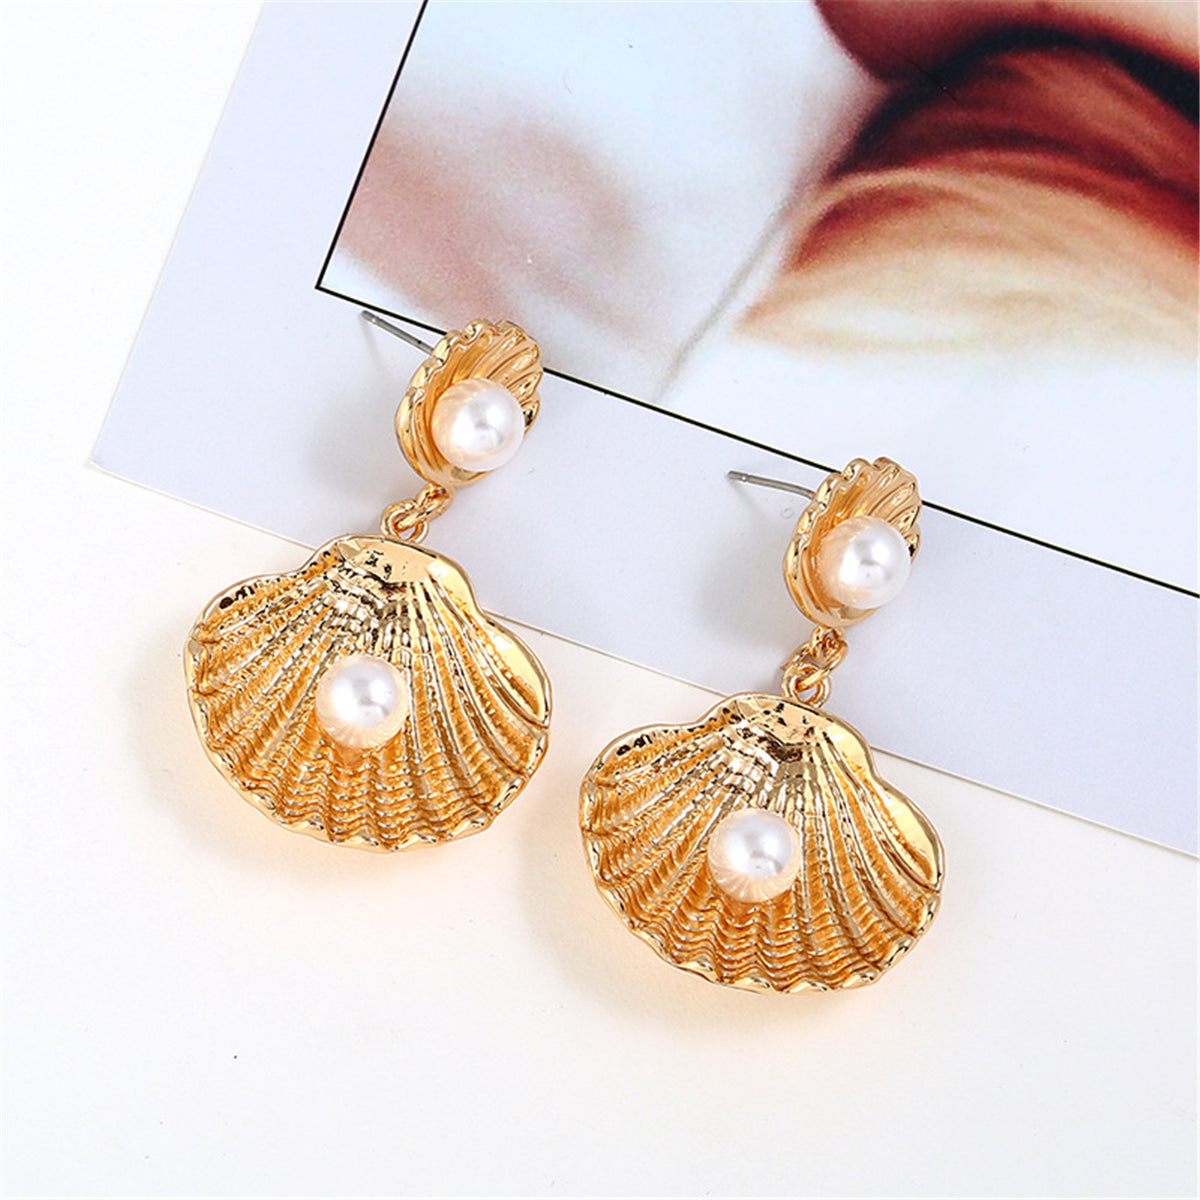 Pearl & 18K Gold-Plated Shell Drop Earrings